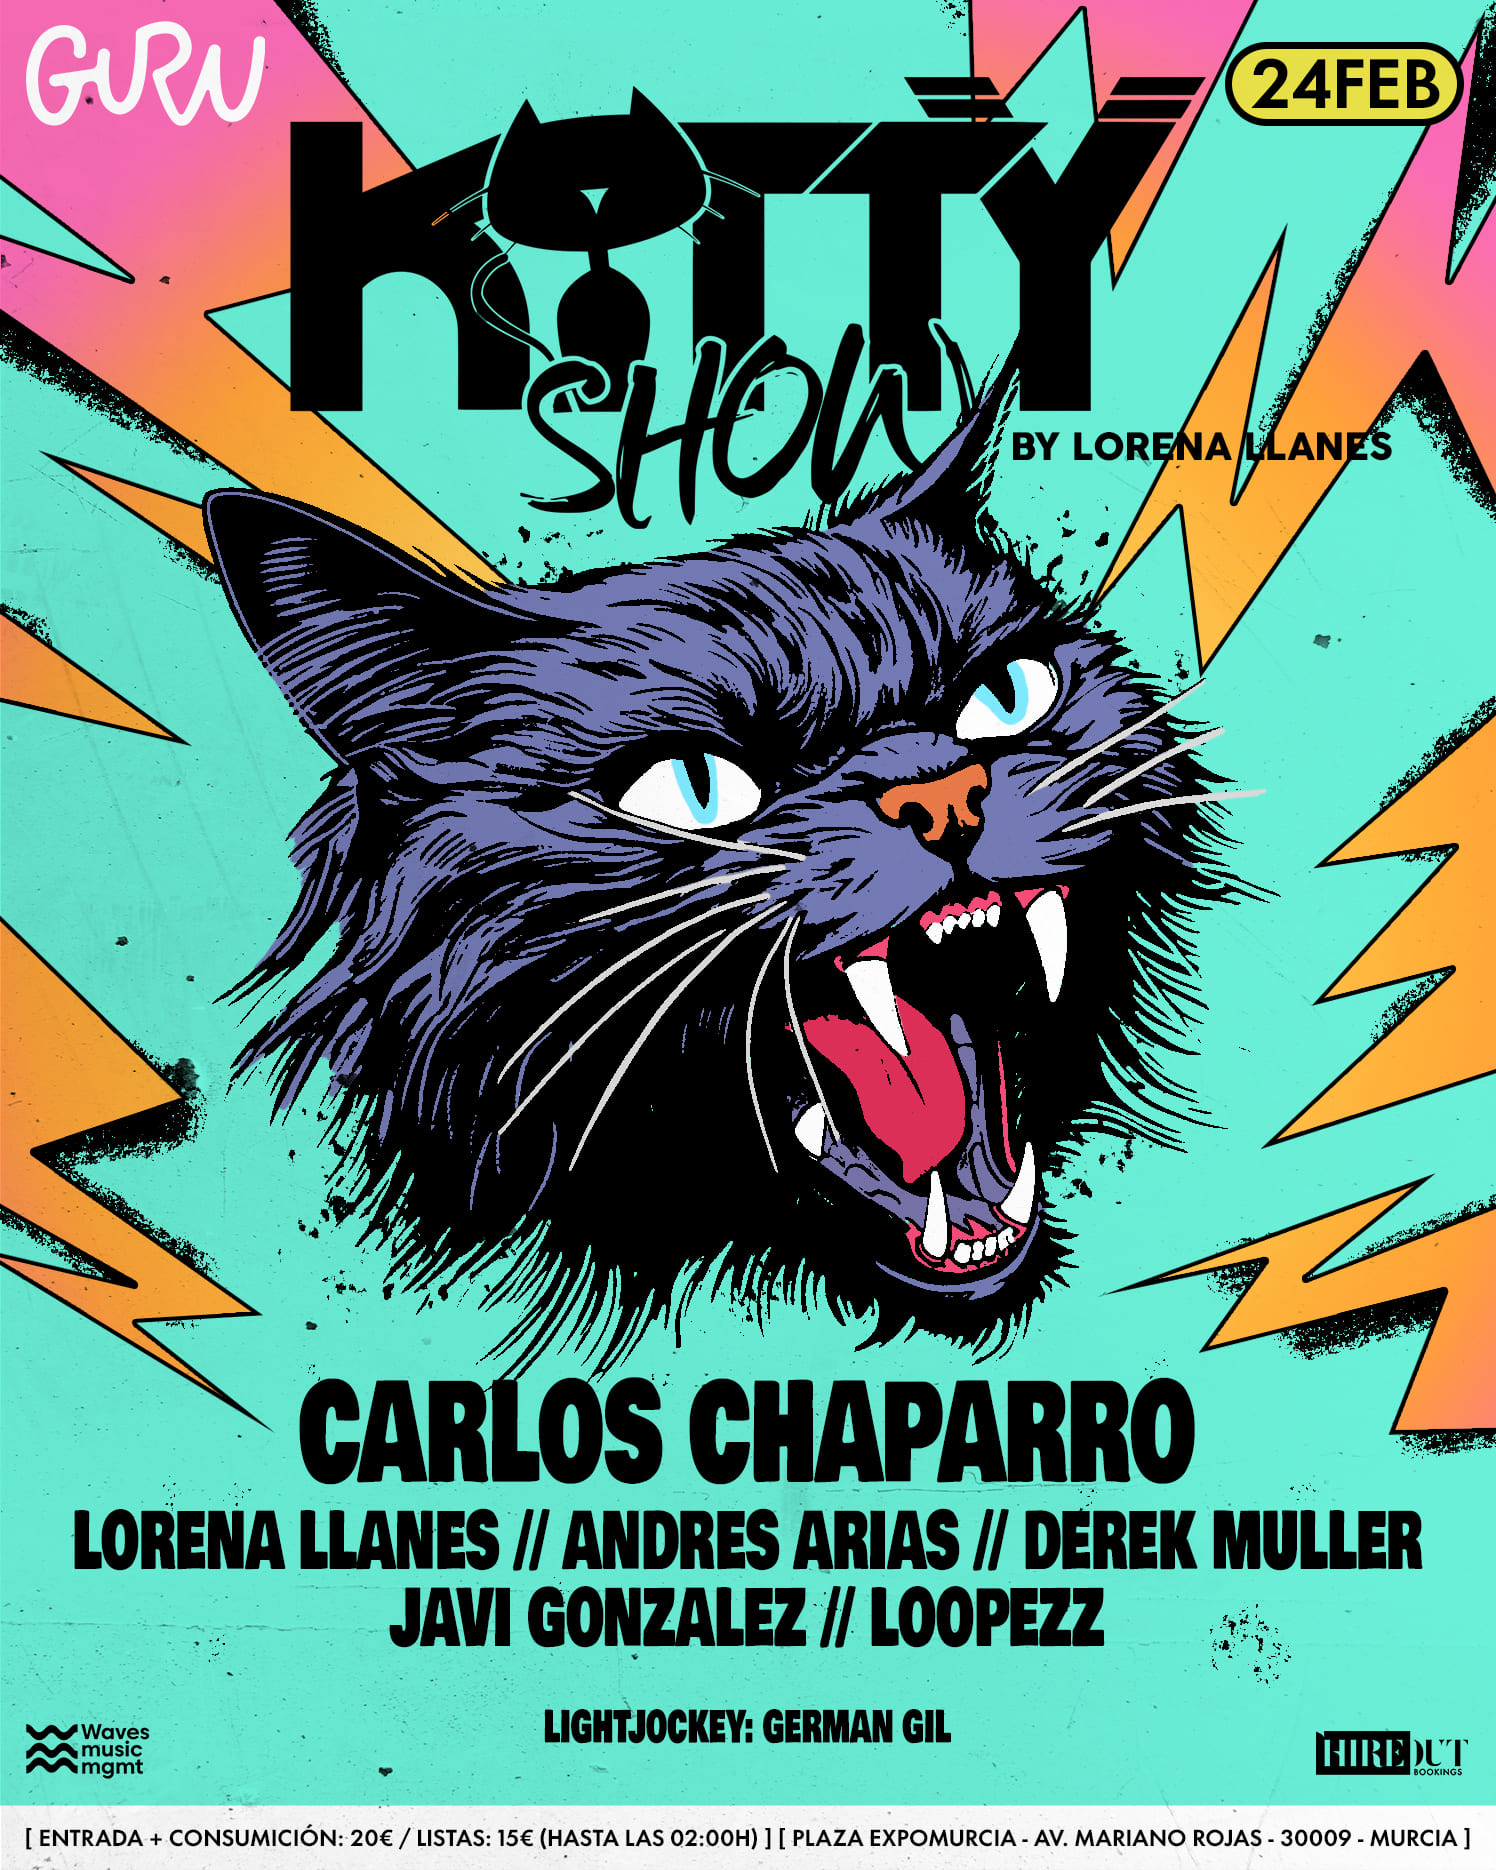 Discoteca Murcia Guru Dance Club - Kitty Show